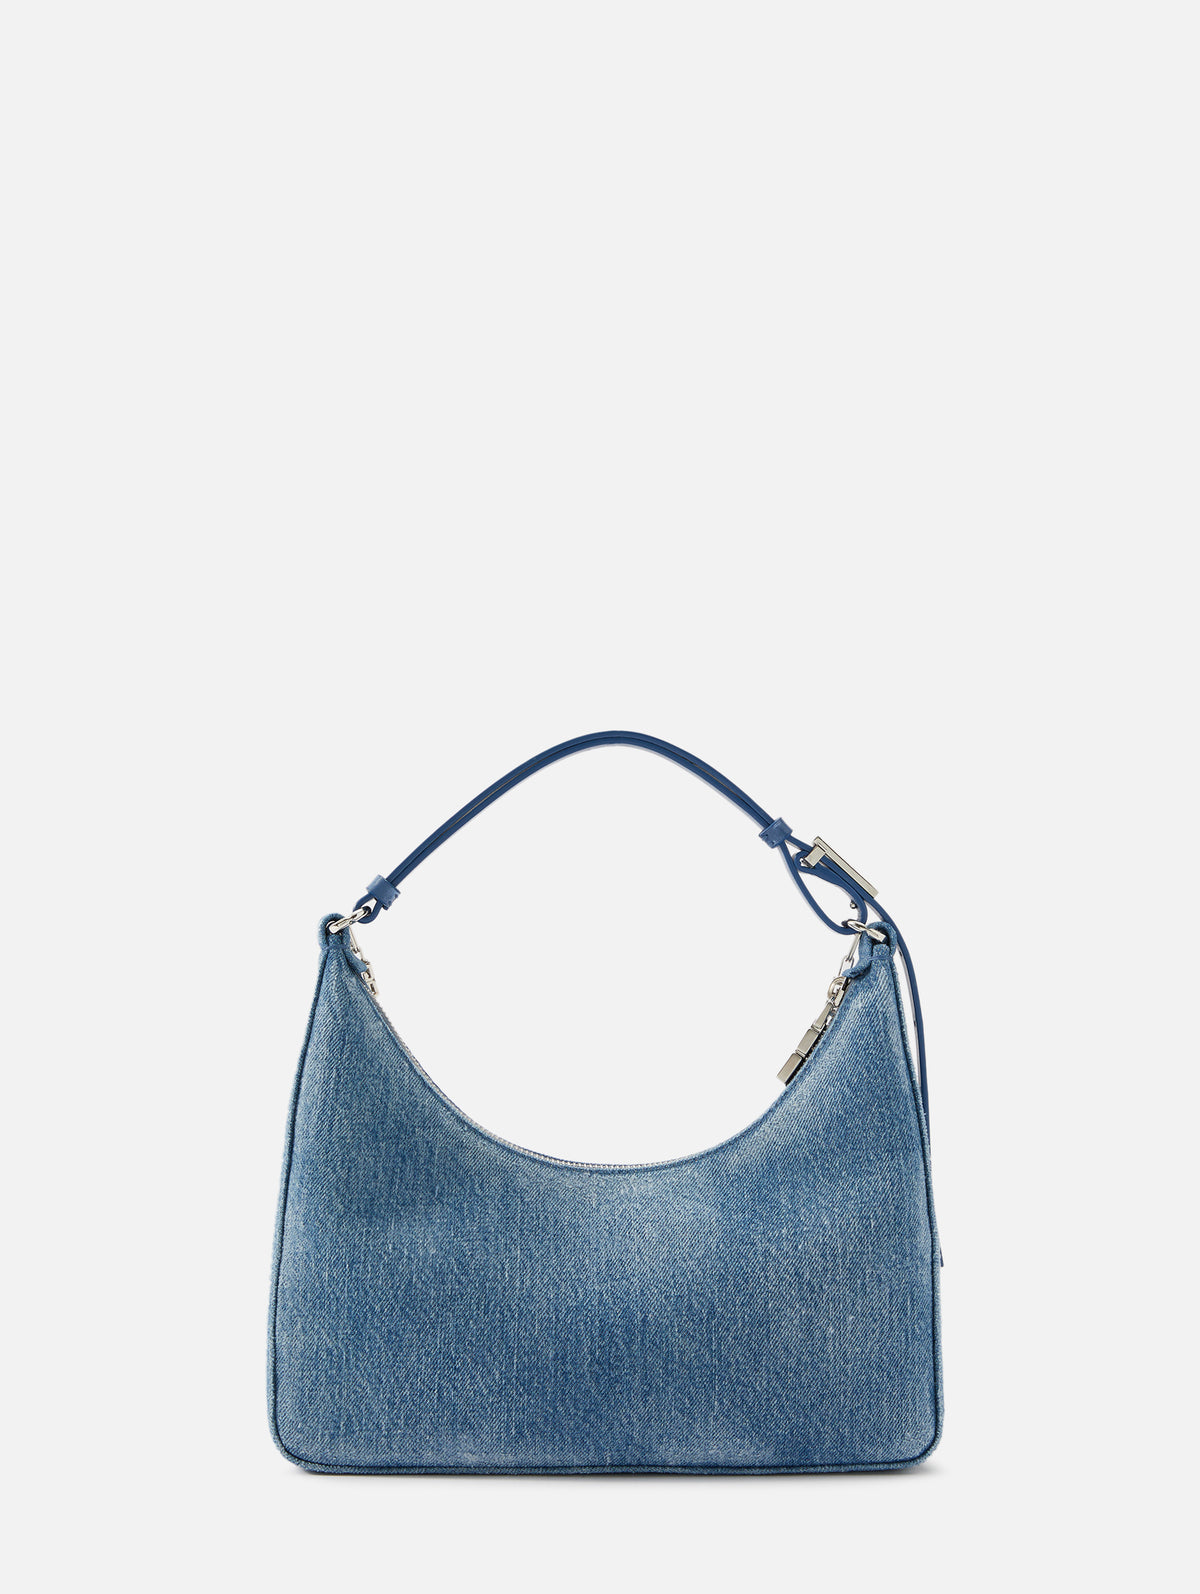 Givenchy Mini Cut Out Leather Shoulder Bag